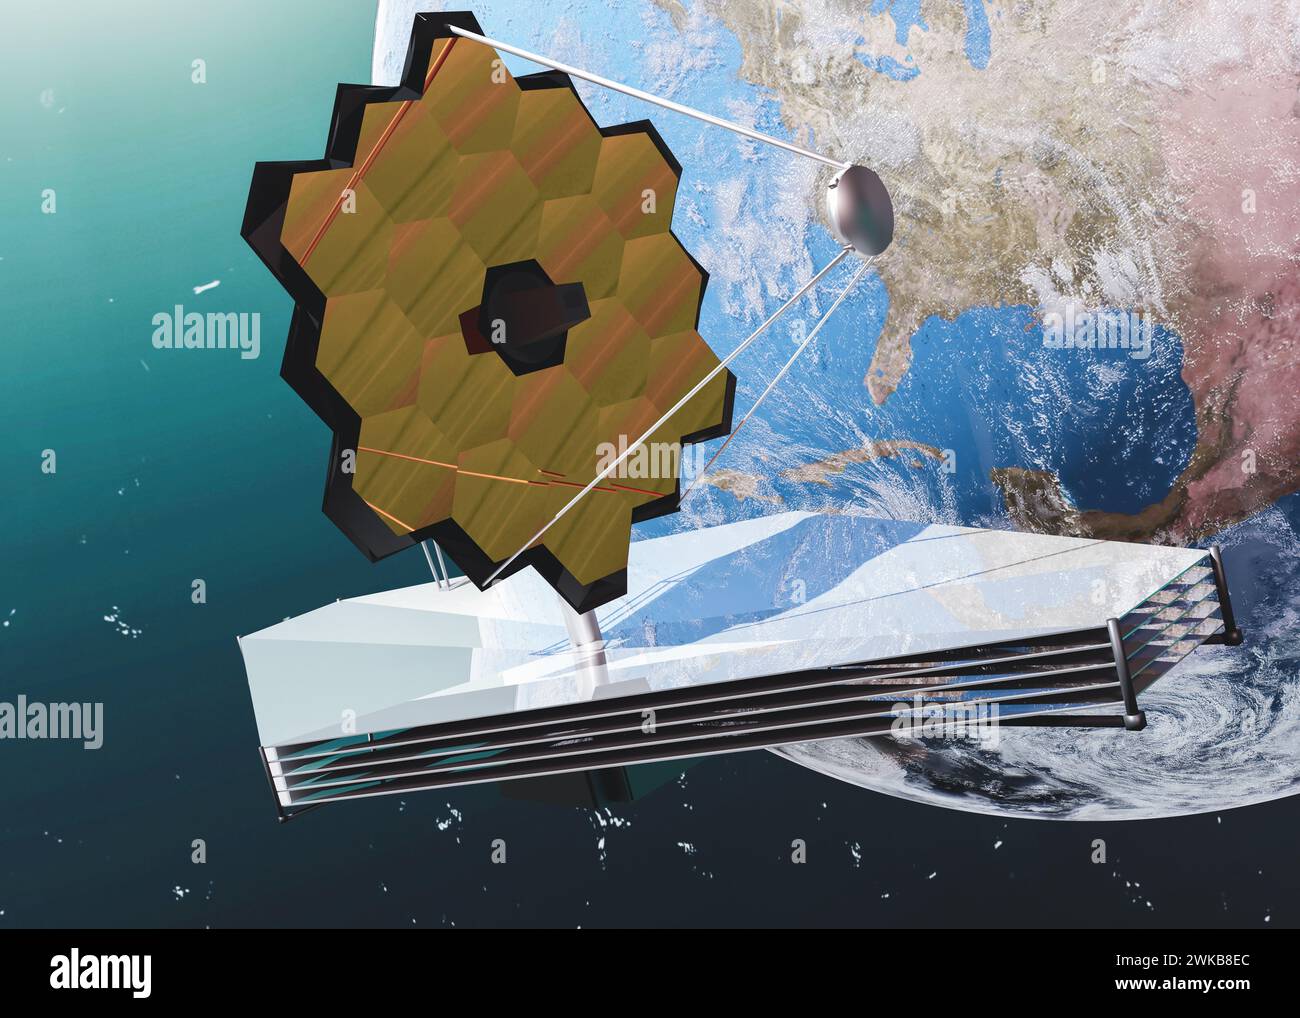 James Webb Teleskop im Weltraum nahe dem blauen Planeten Erde. James Webb Teleskop im Weltraum nahe dem blauen Planeten Erde. Elemente dieses 3D-Rendering i Stockfoto